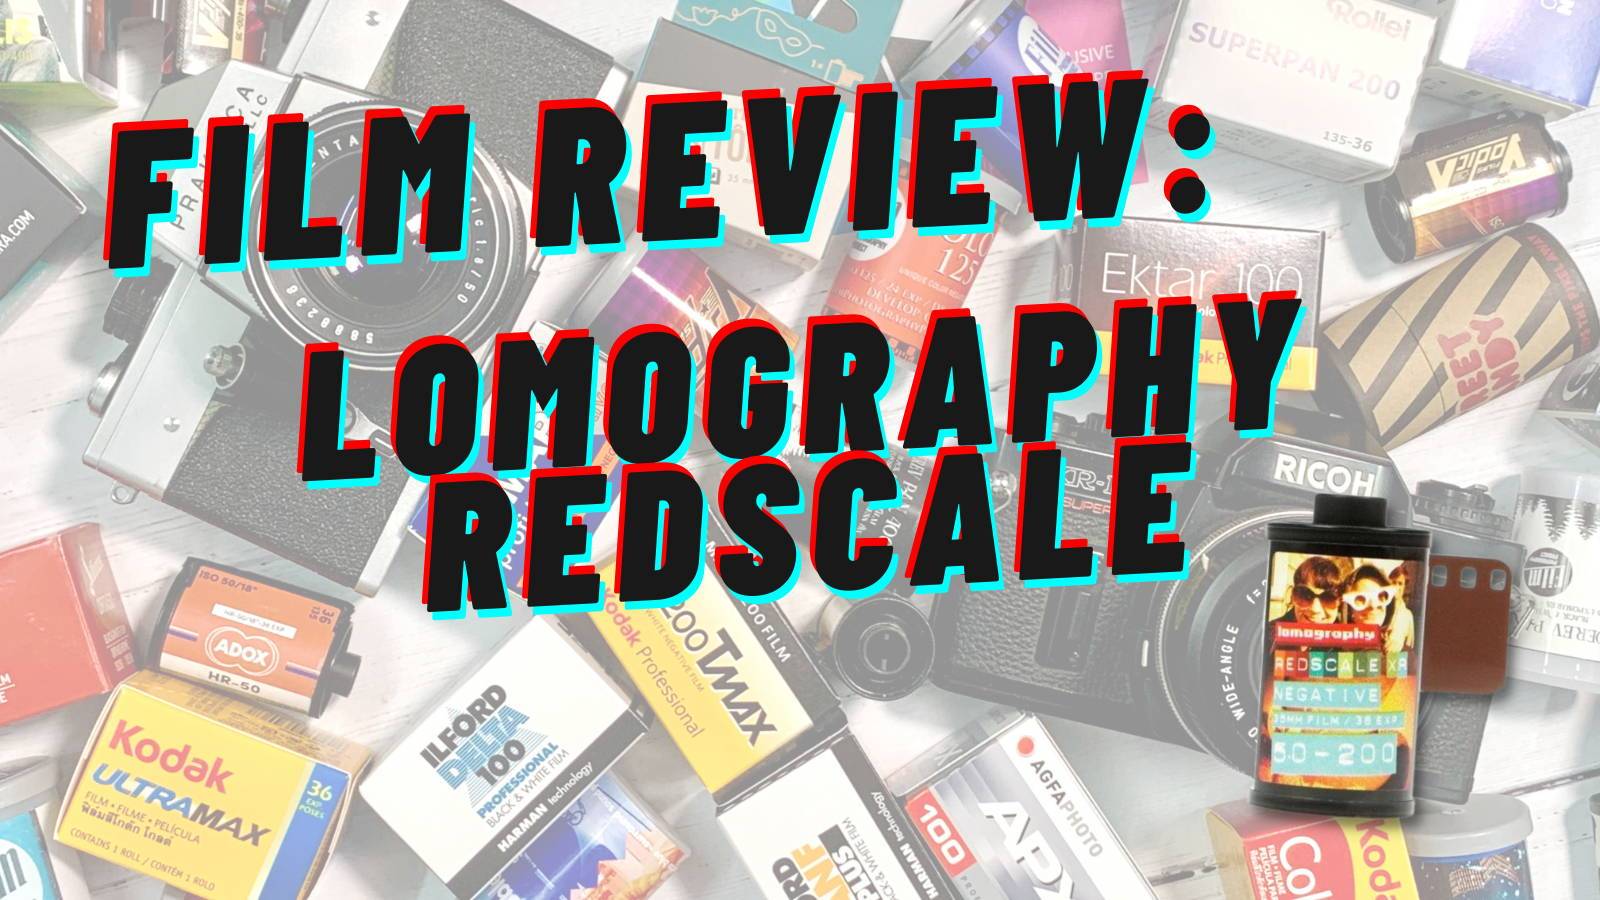 Film Review Lomography Redscale - Analogue Wonderland